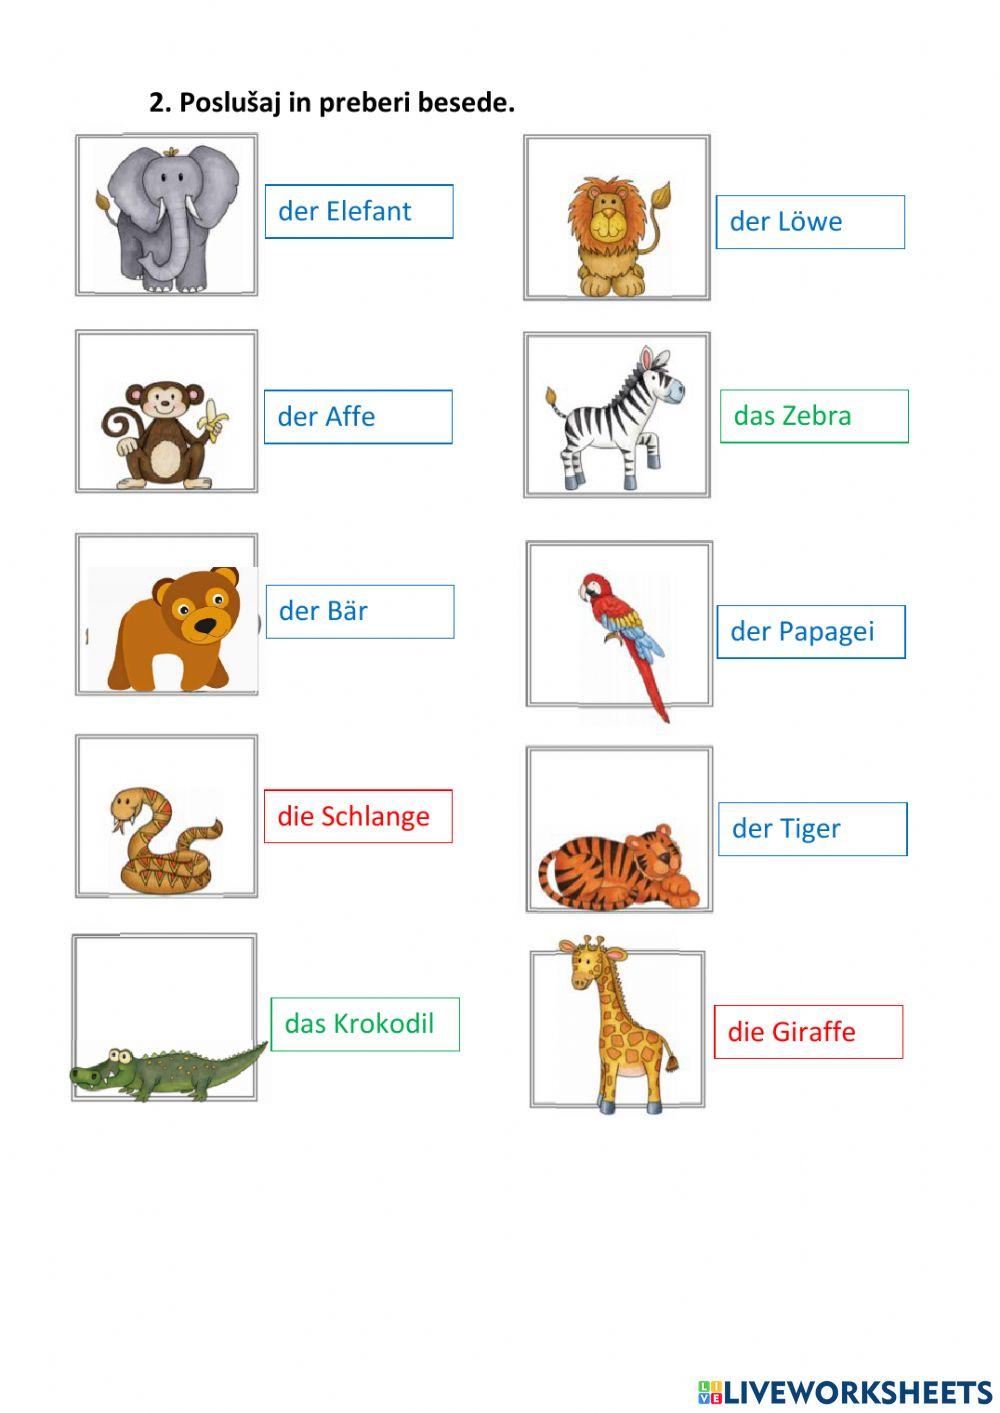 Tiere im Zoo2 - 3. razred